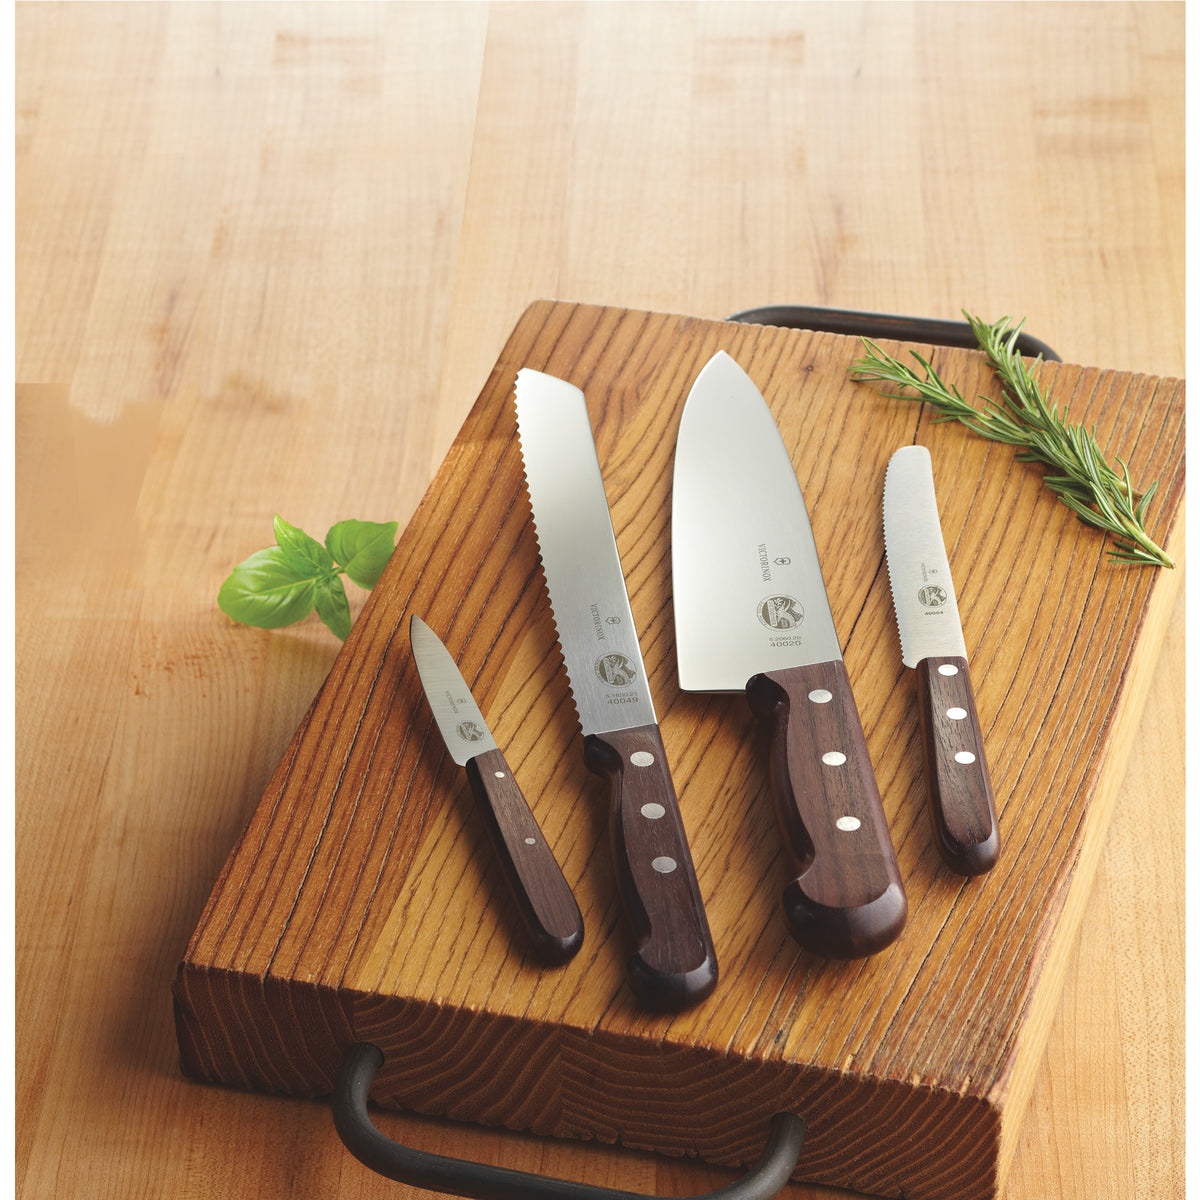 Victorinox Rosewood 10 Breaking Knife – PERFECT EDGE CUTLERY